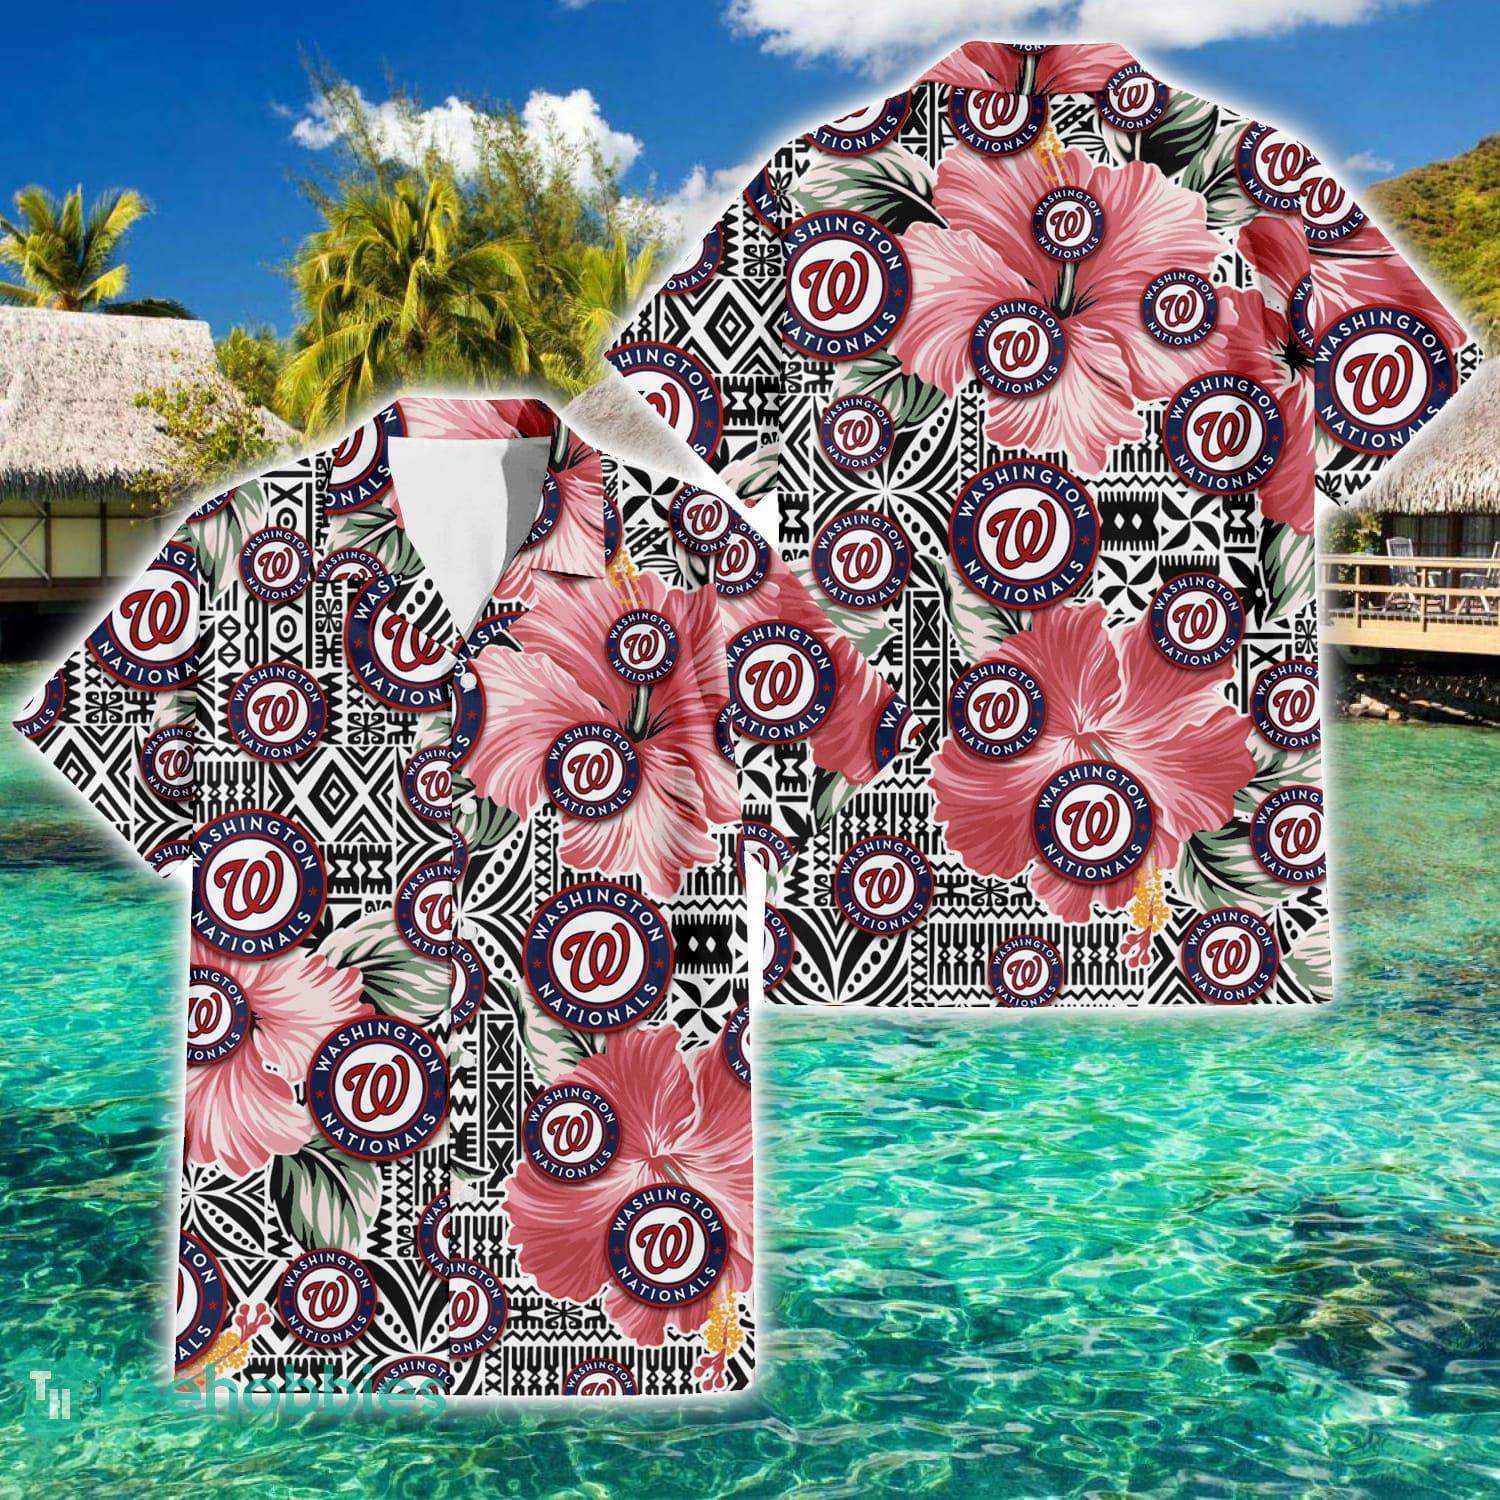 Washington Nationals Vintage MLB – Premium Set 3D Hawaiian Shirt And Short  Gift For Men And Women - Freedomdesign